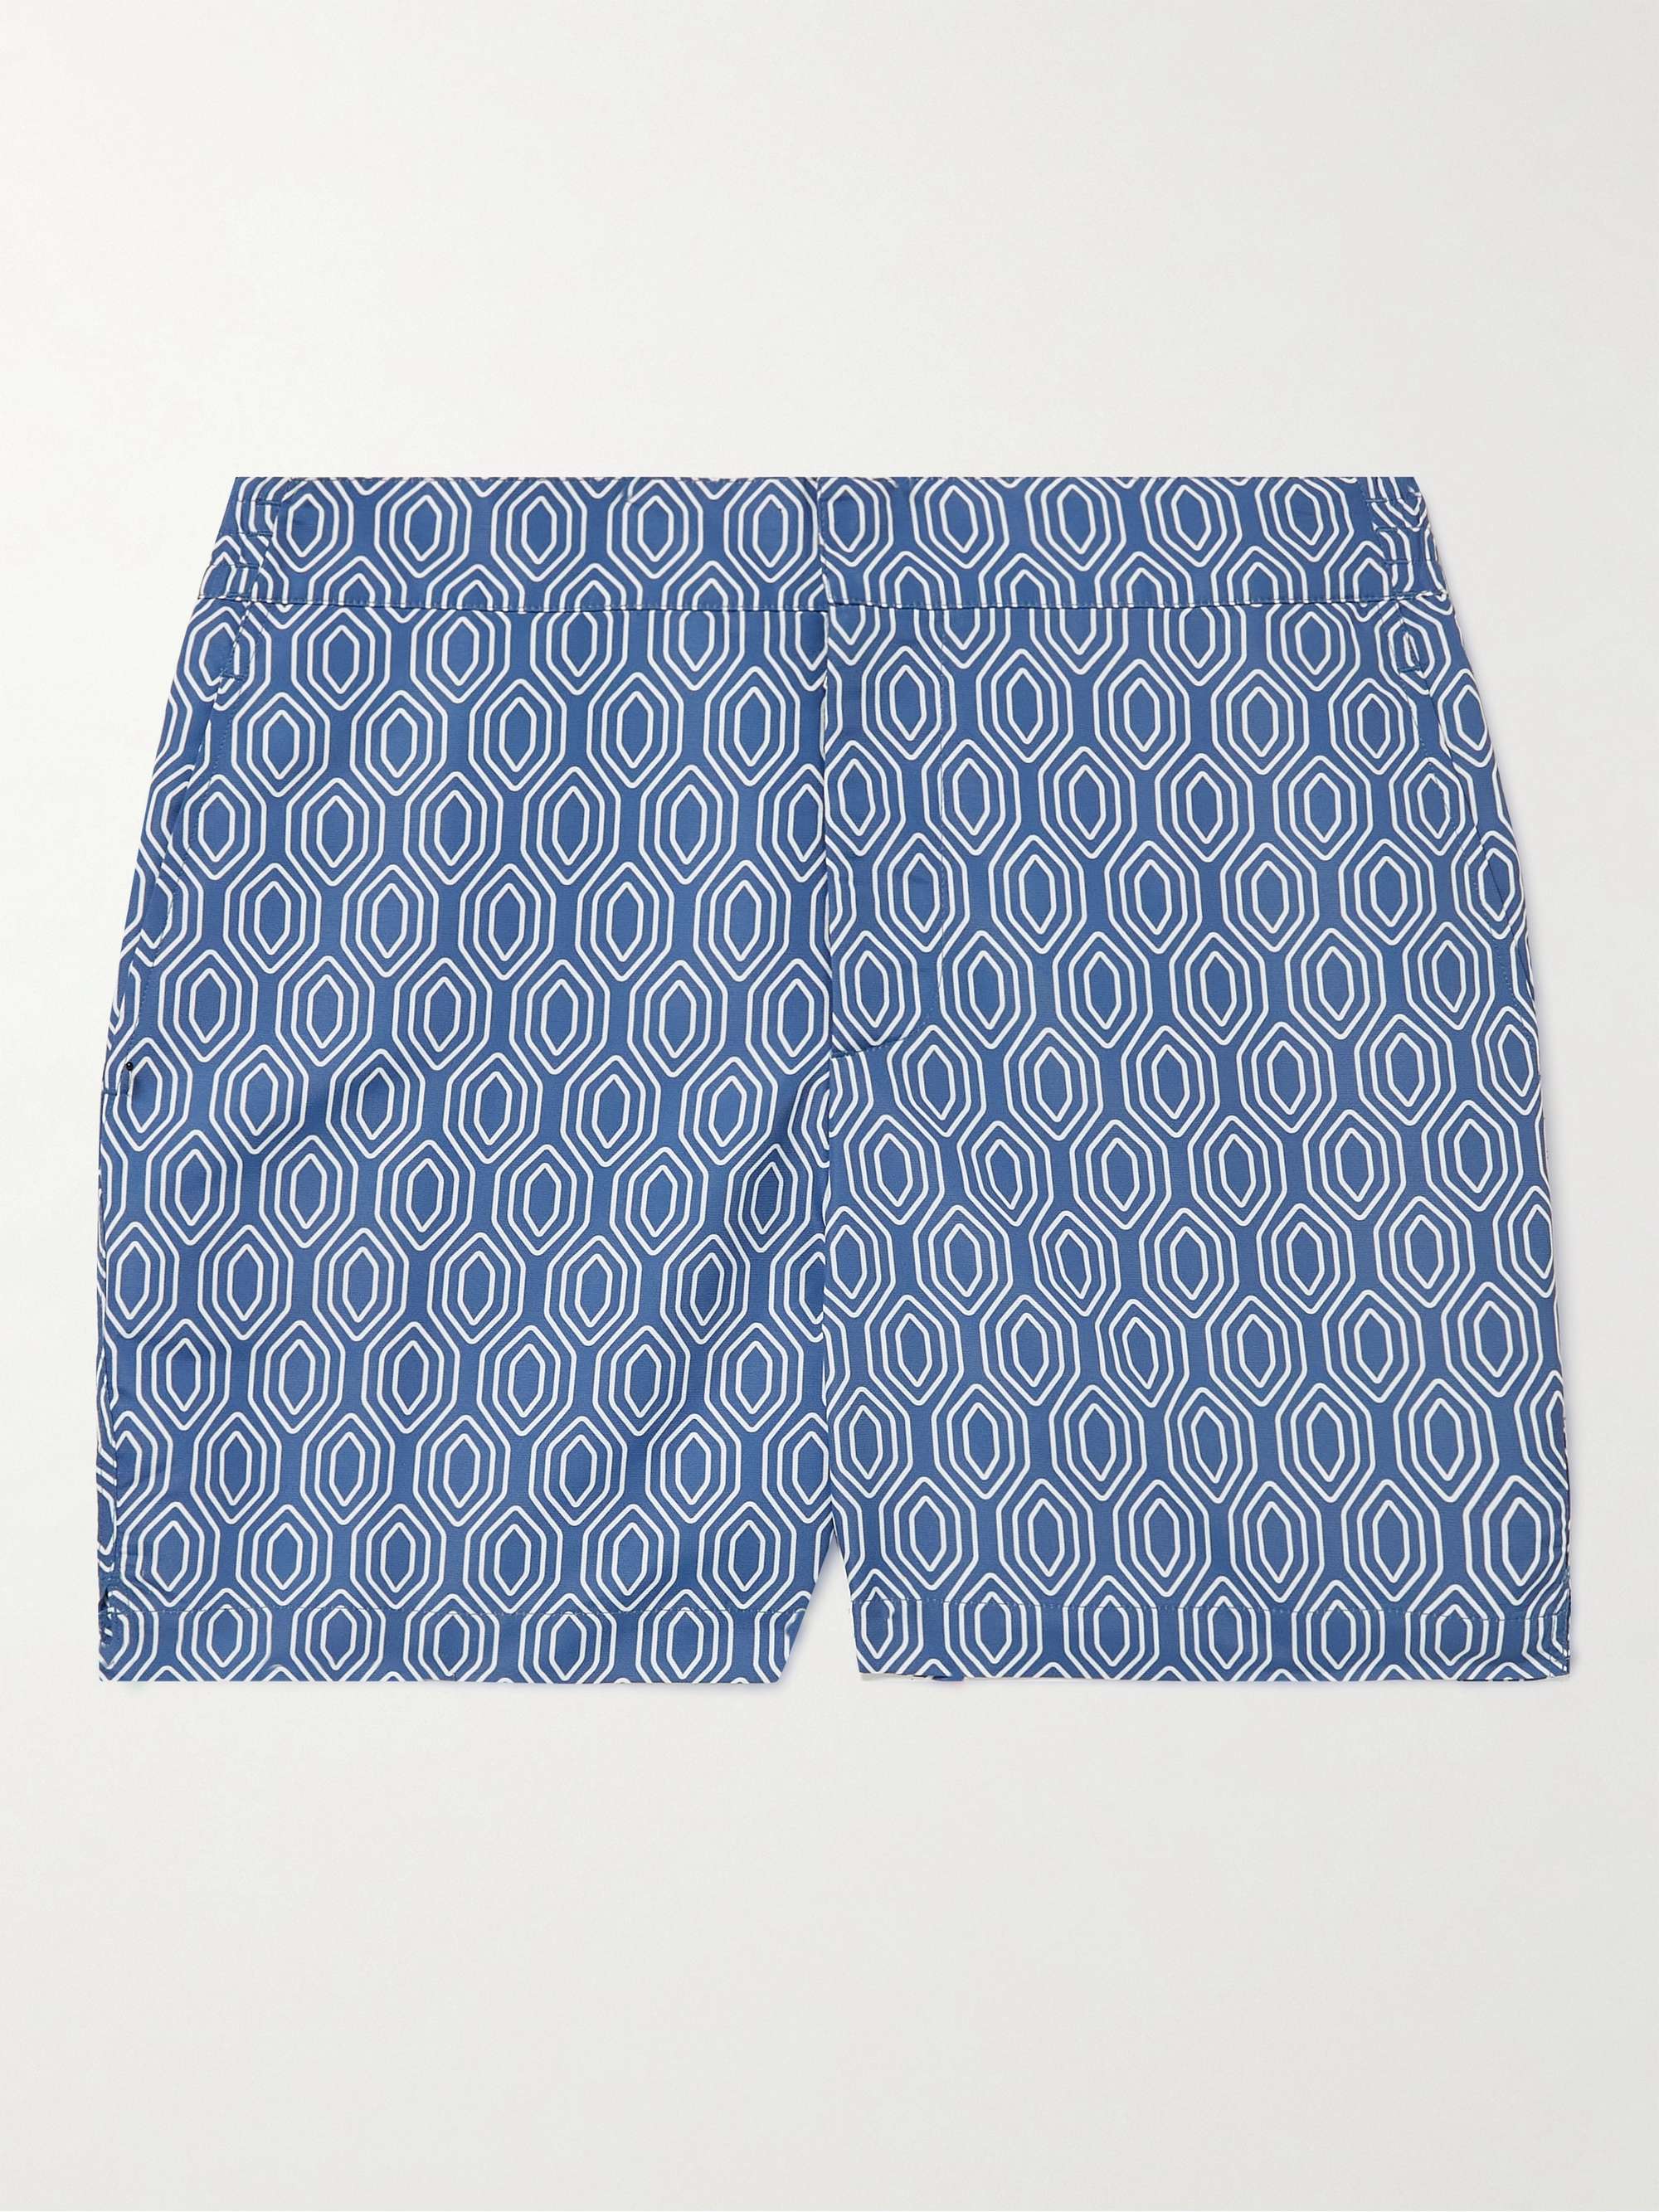 FRESCOBOL CARIOCA Slim-Fit Short-Length Printed Swim Shorts